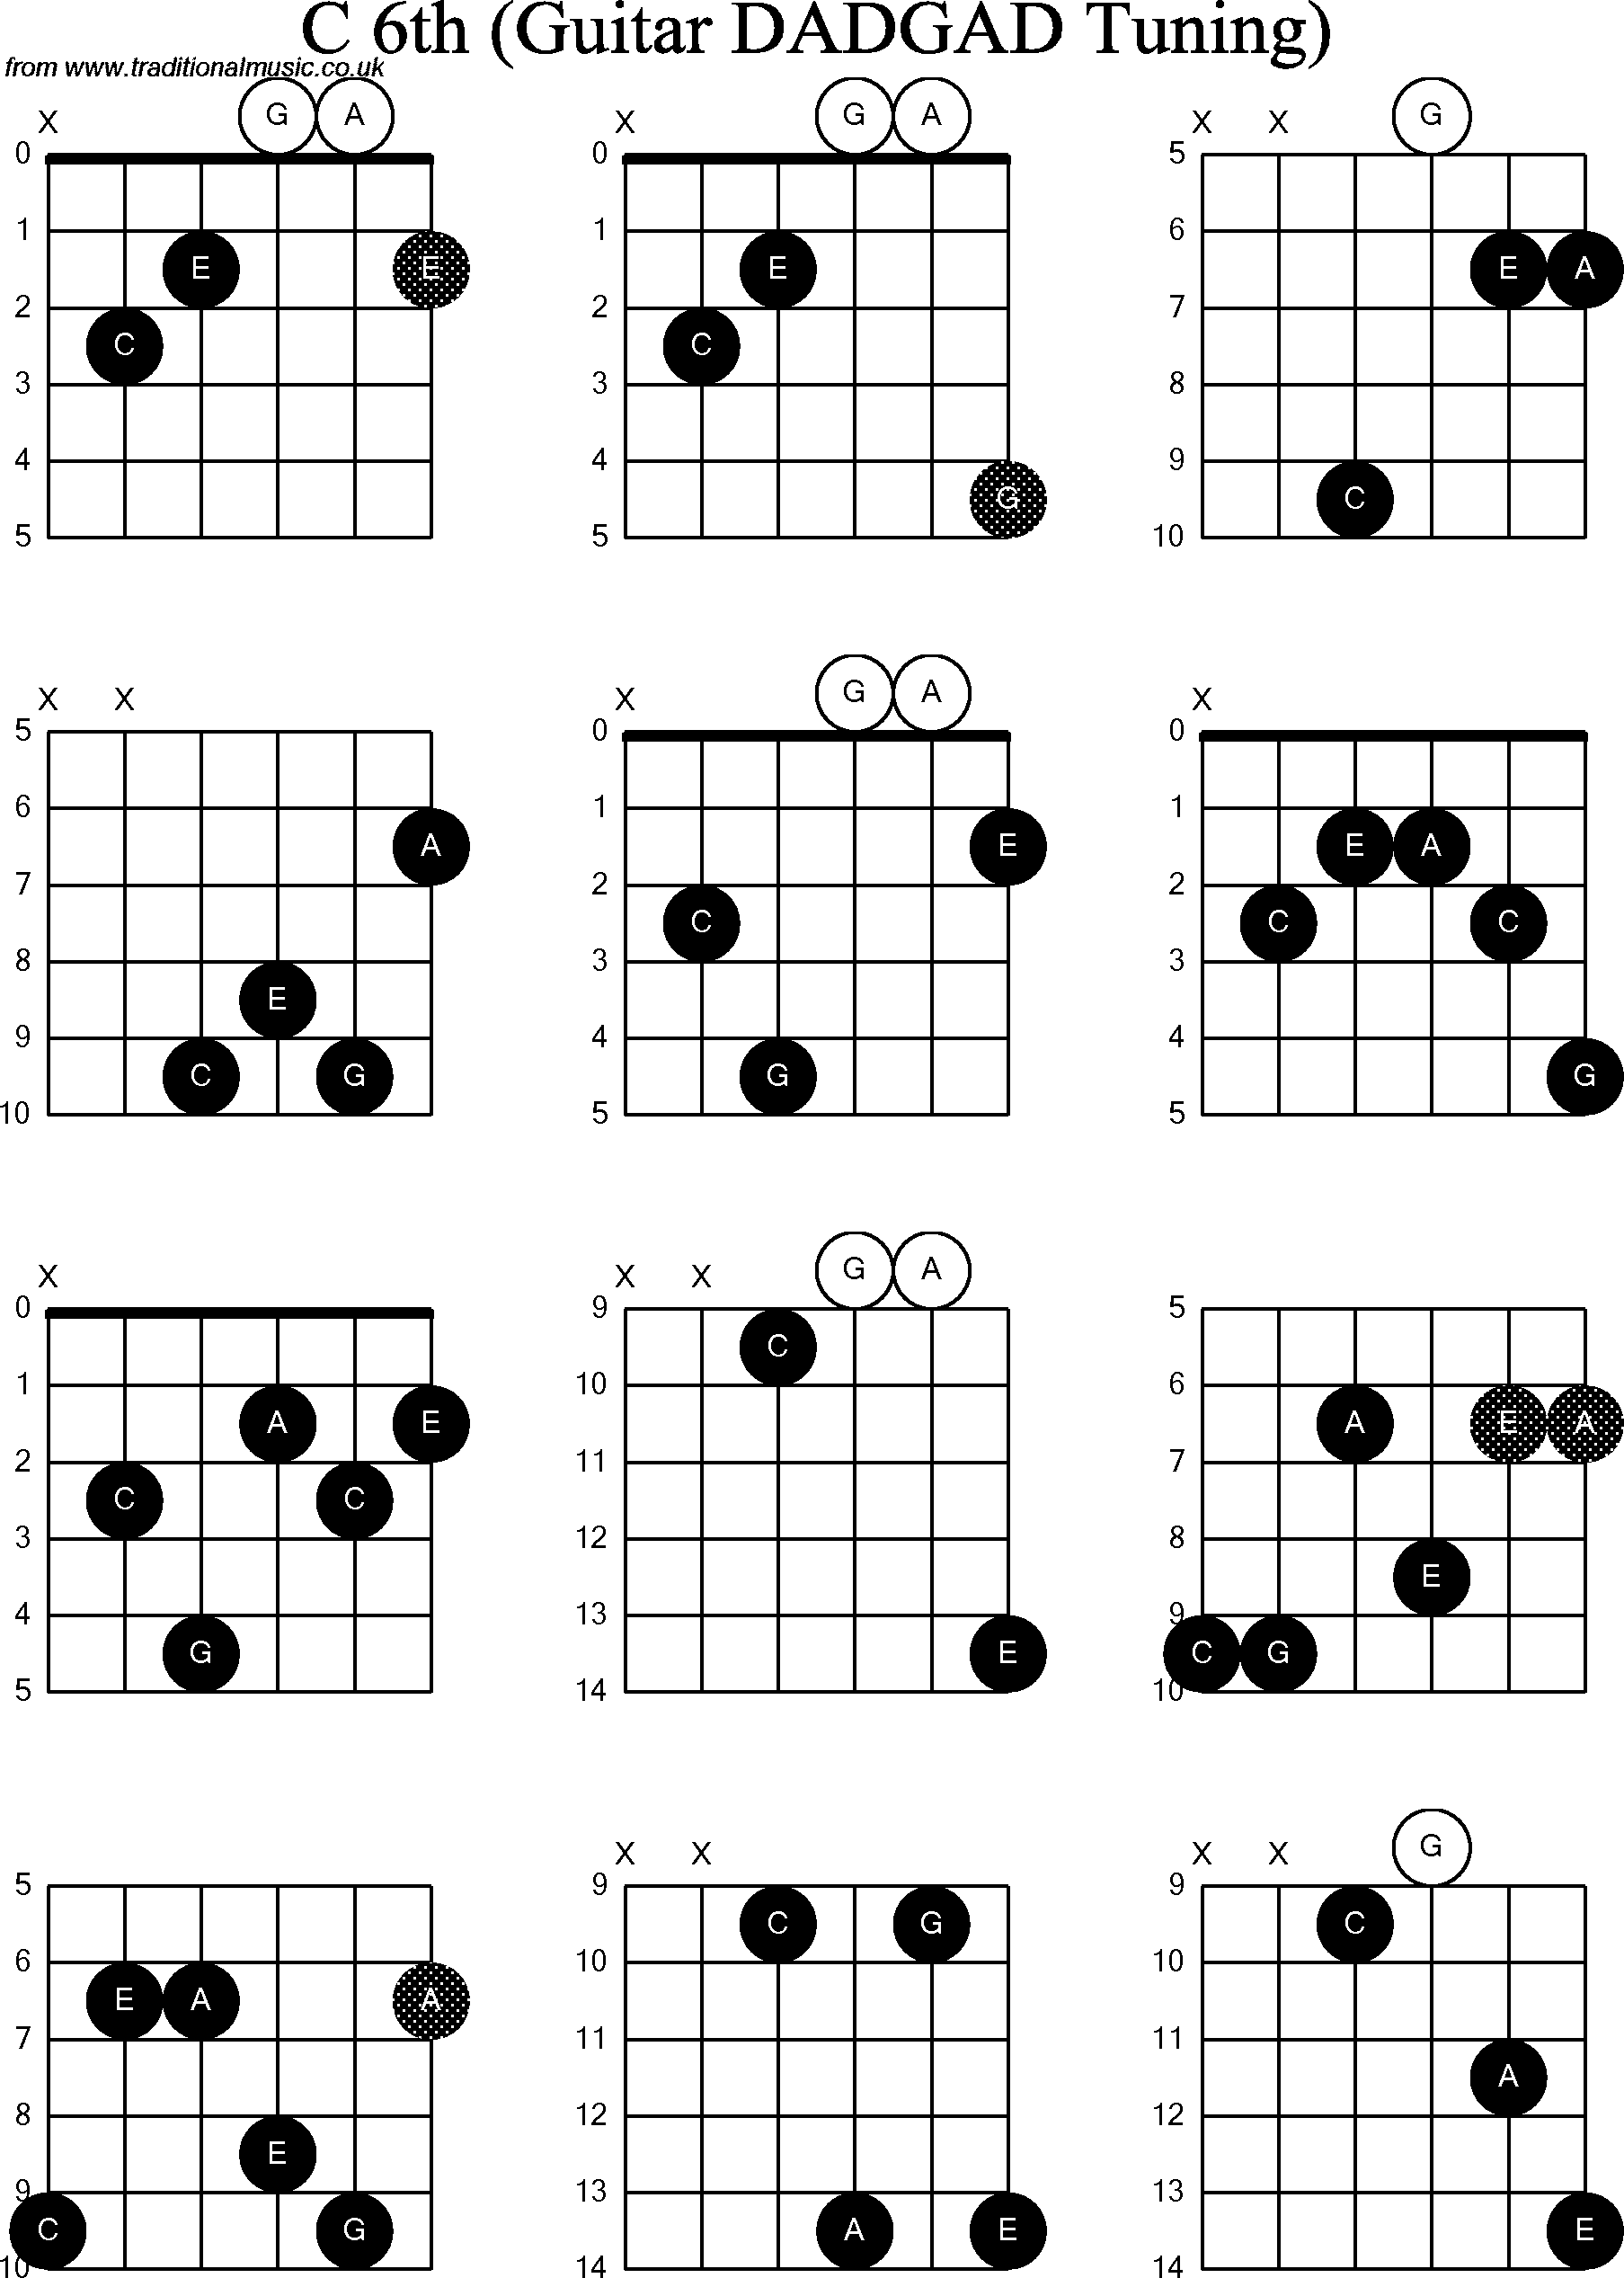 Chord Diagrams for D Modal Guitar(DADGAD), C6th